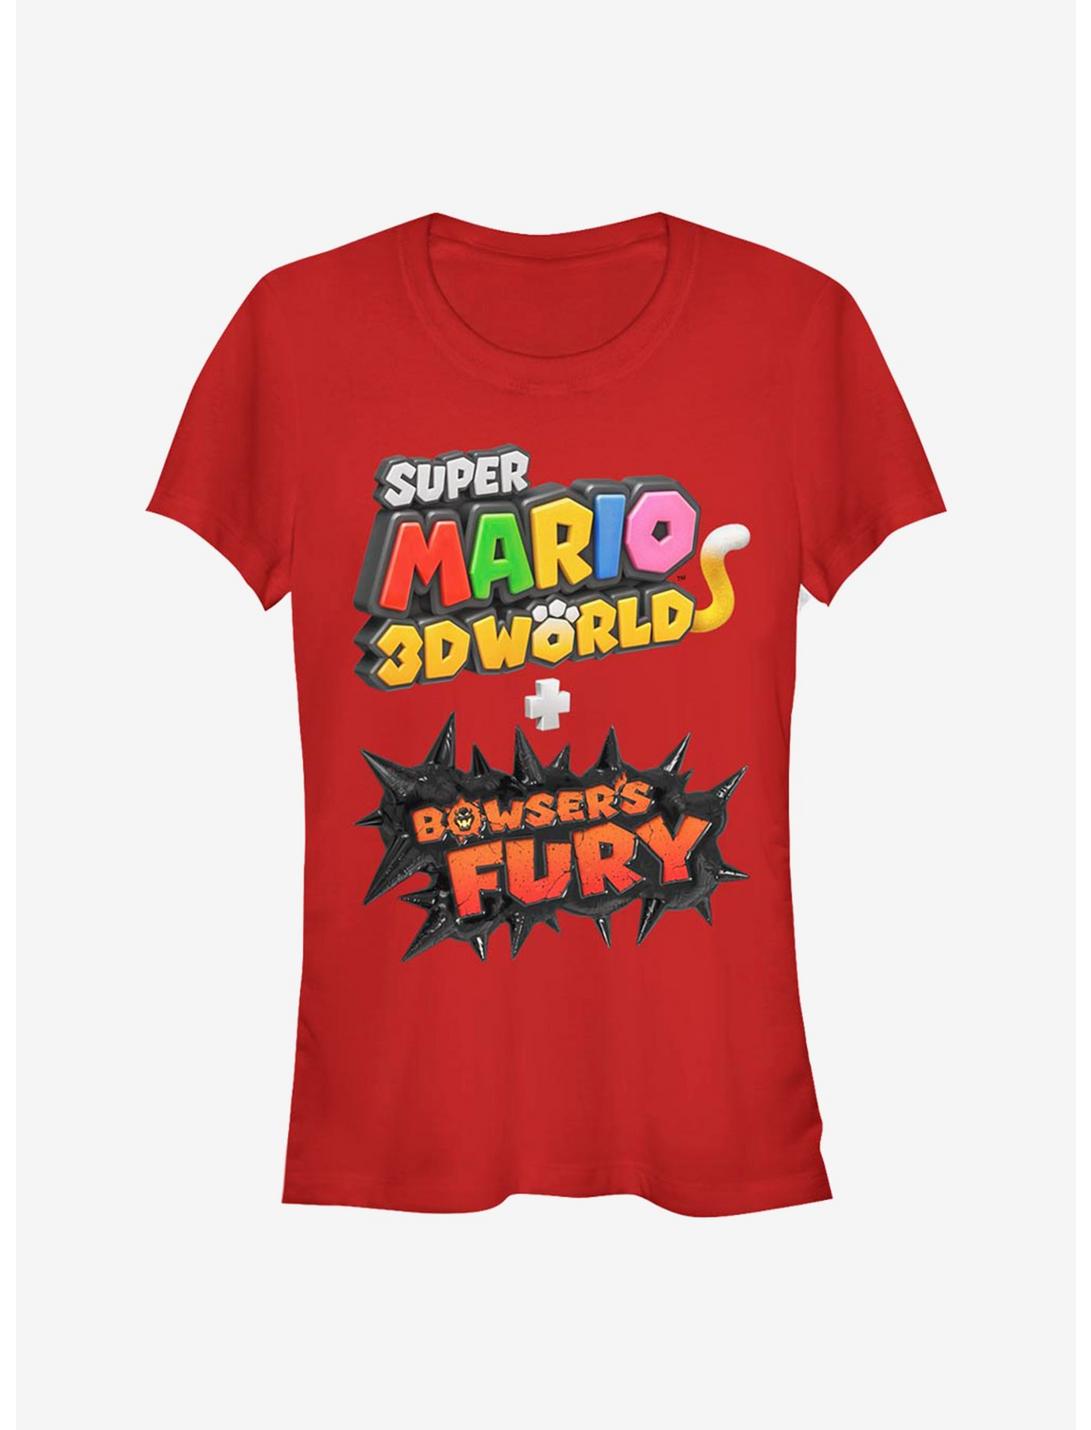 Super Mario 3D Bowsers Fury Logo Girls T-Shirt, RED, hi-res